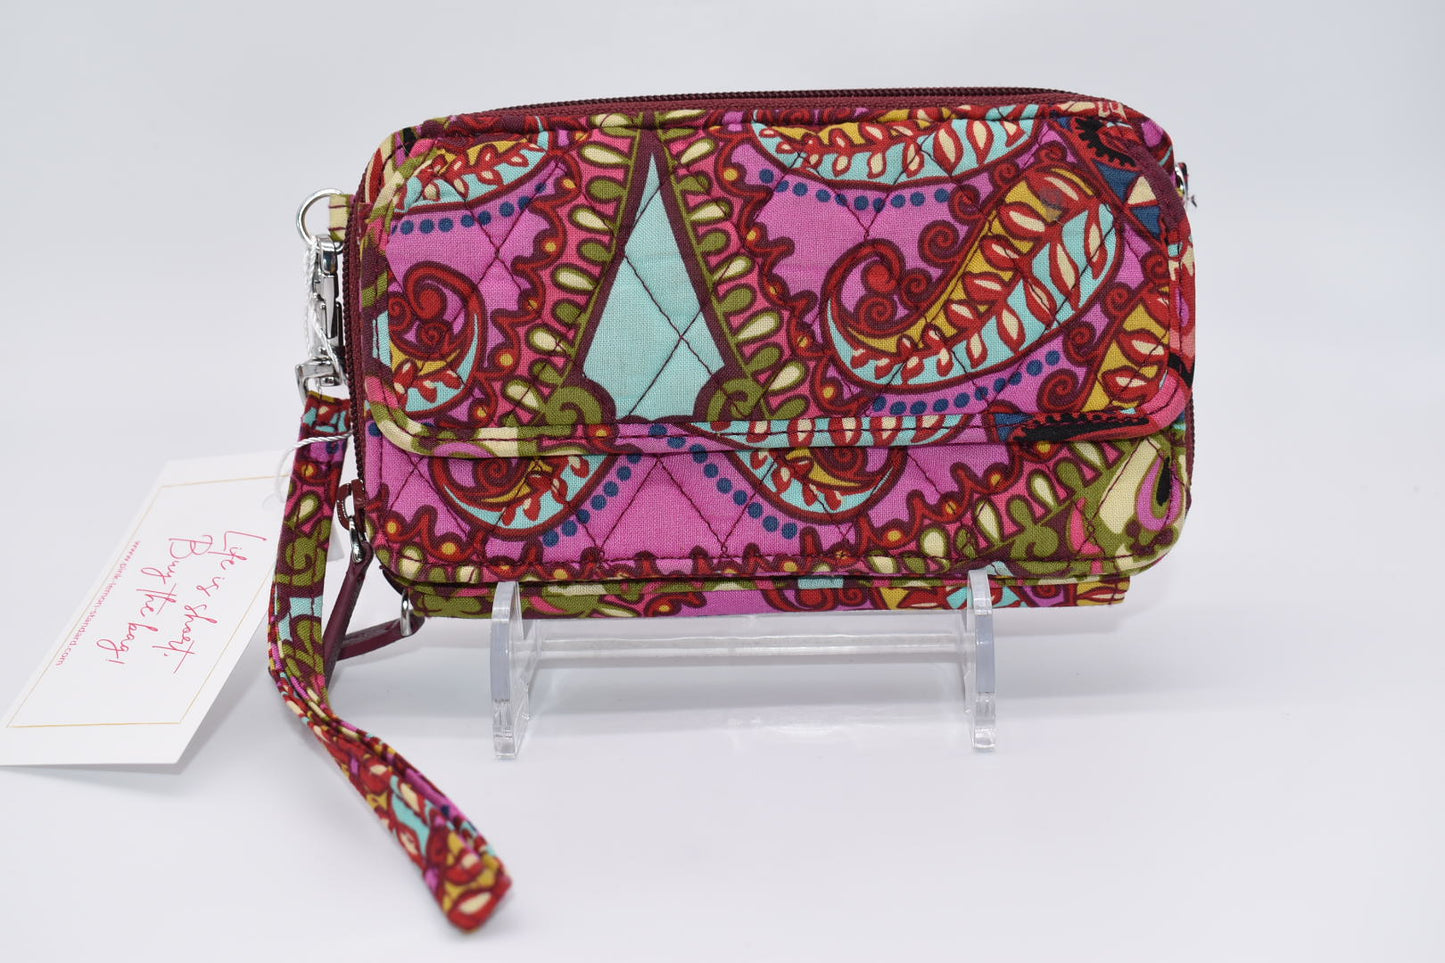 Vera Bradley All-in-One Wristlet Bag in "Resort Medallion" Pattern